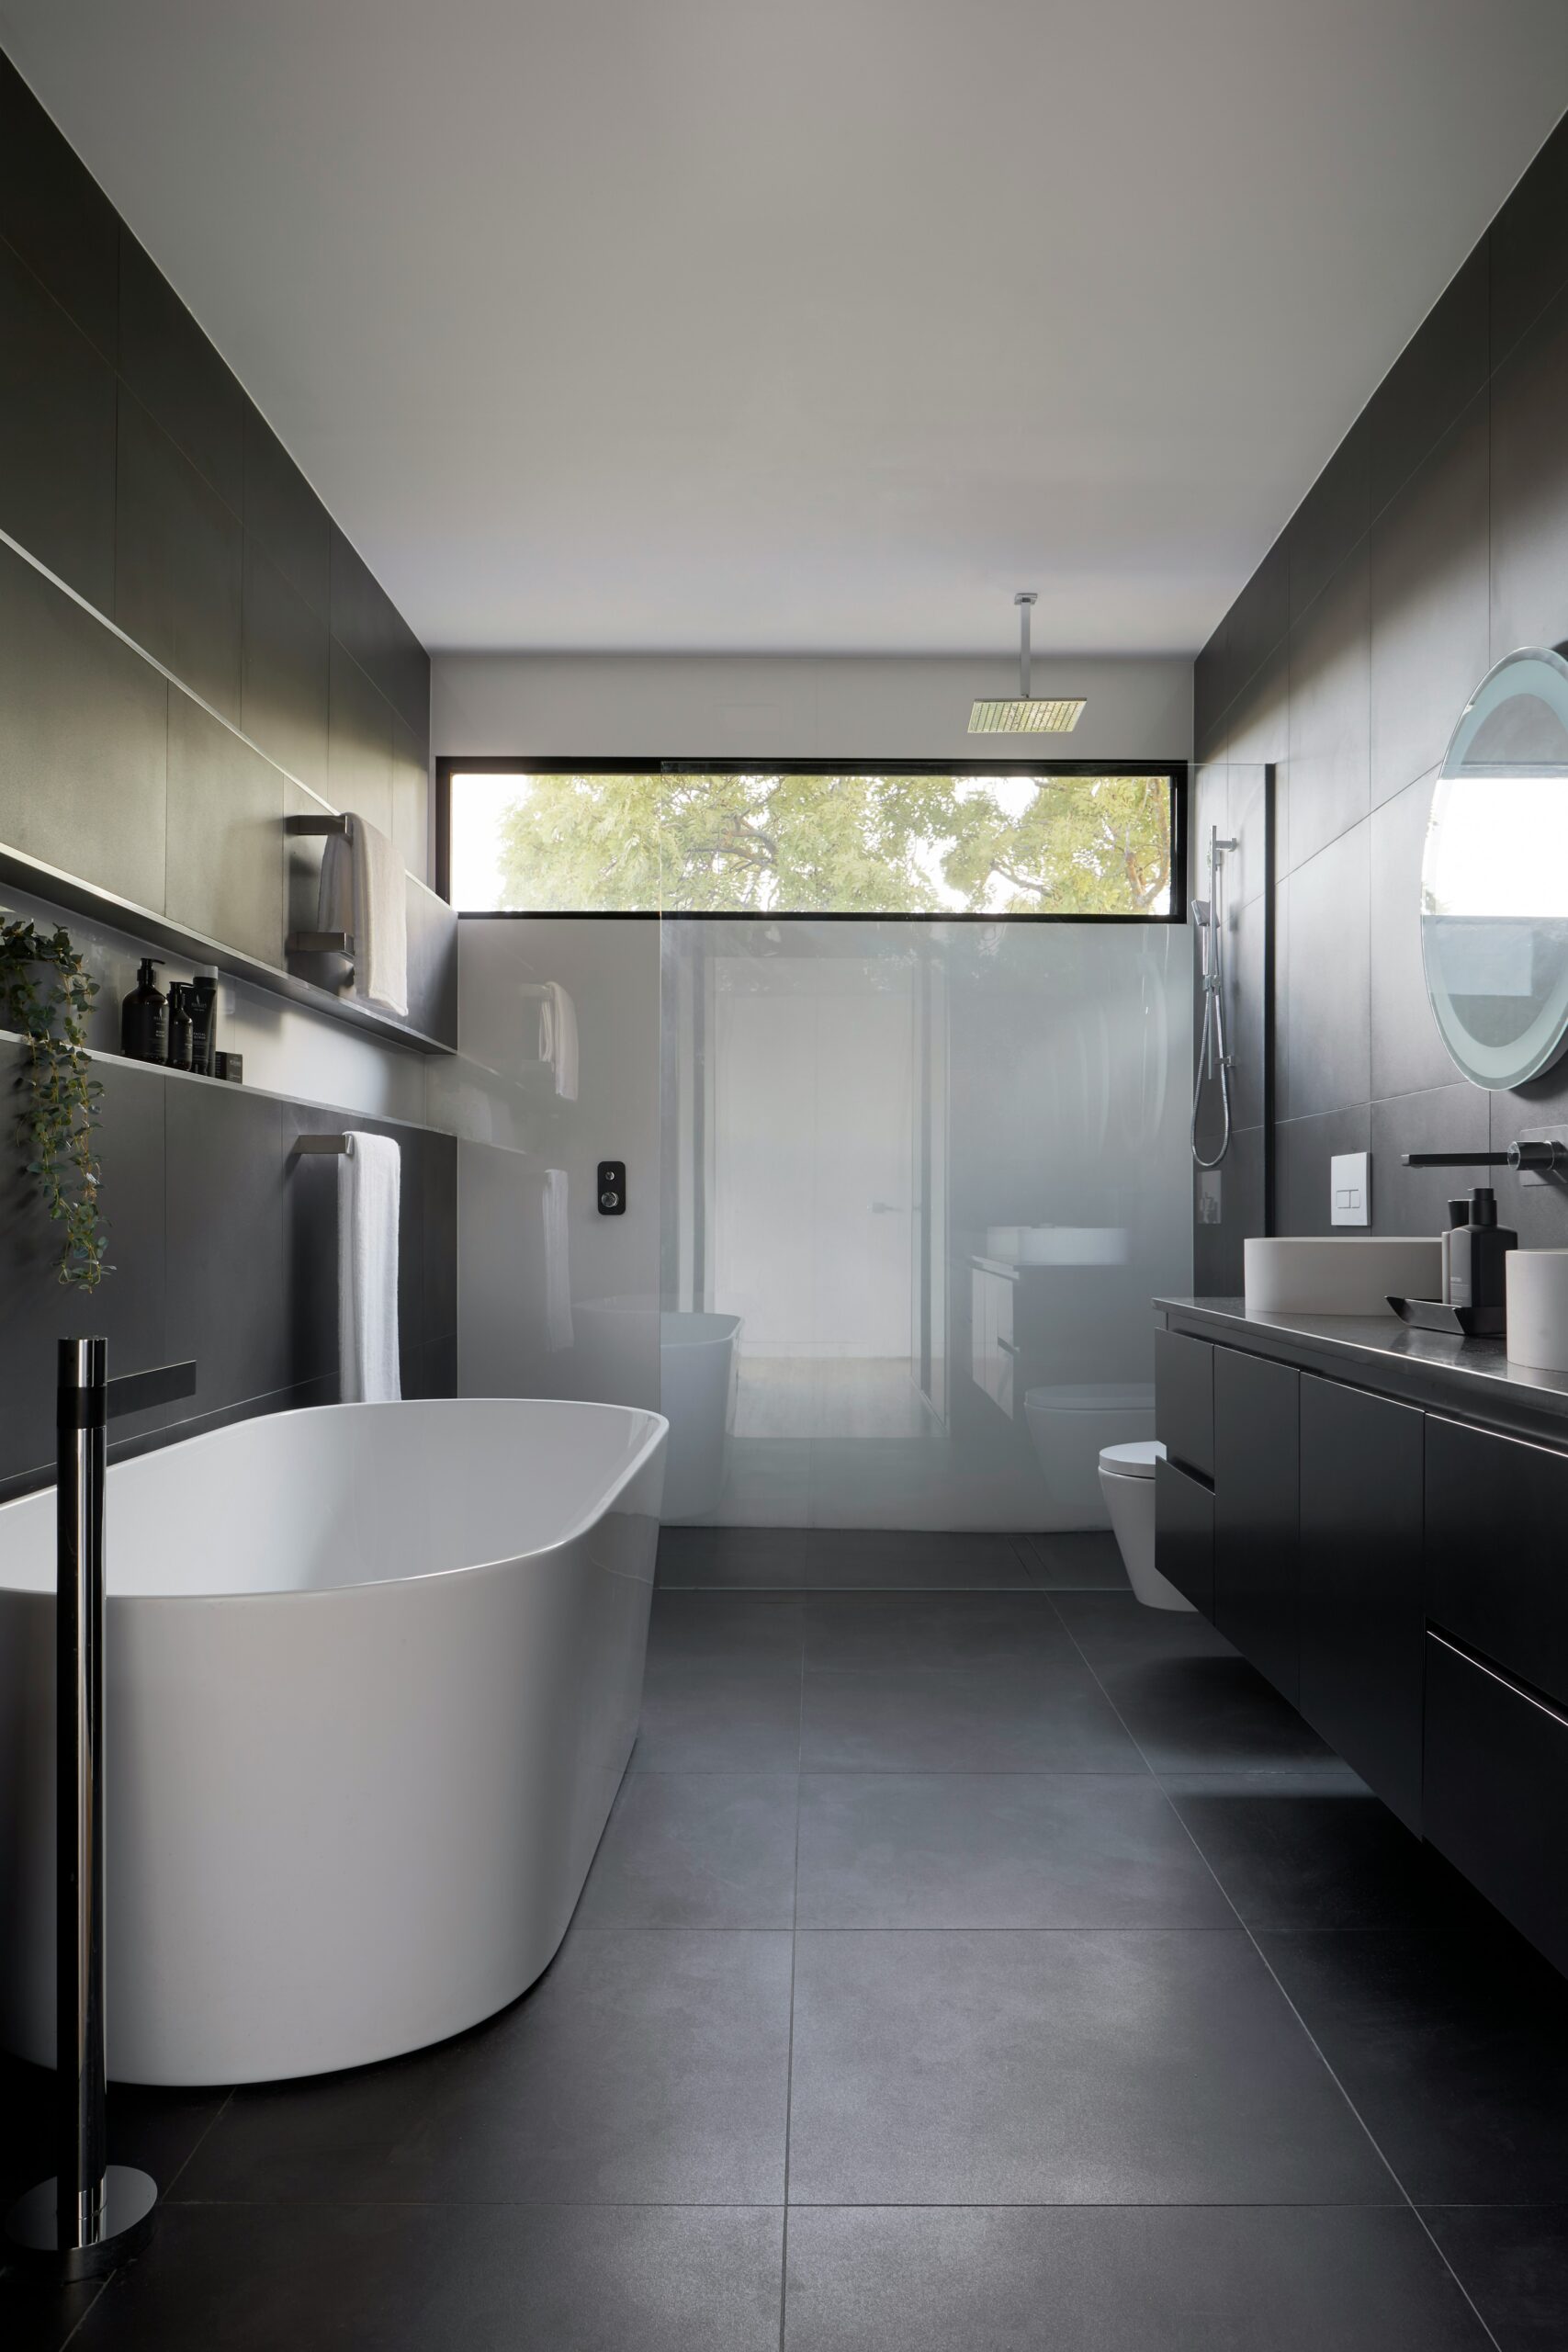 Top Five Bathroom Tiles Ideas for 2021